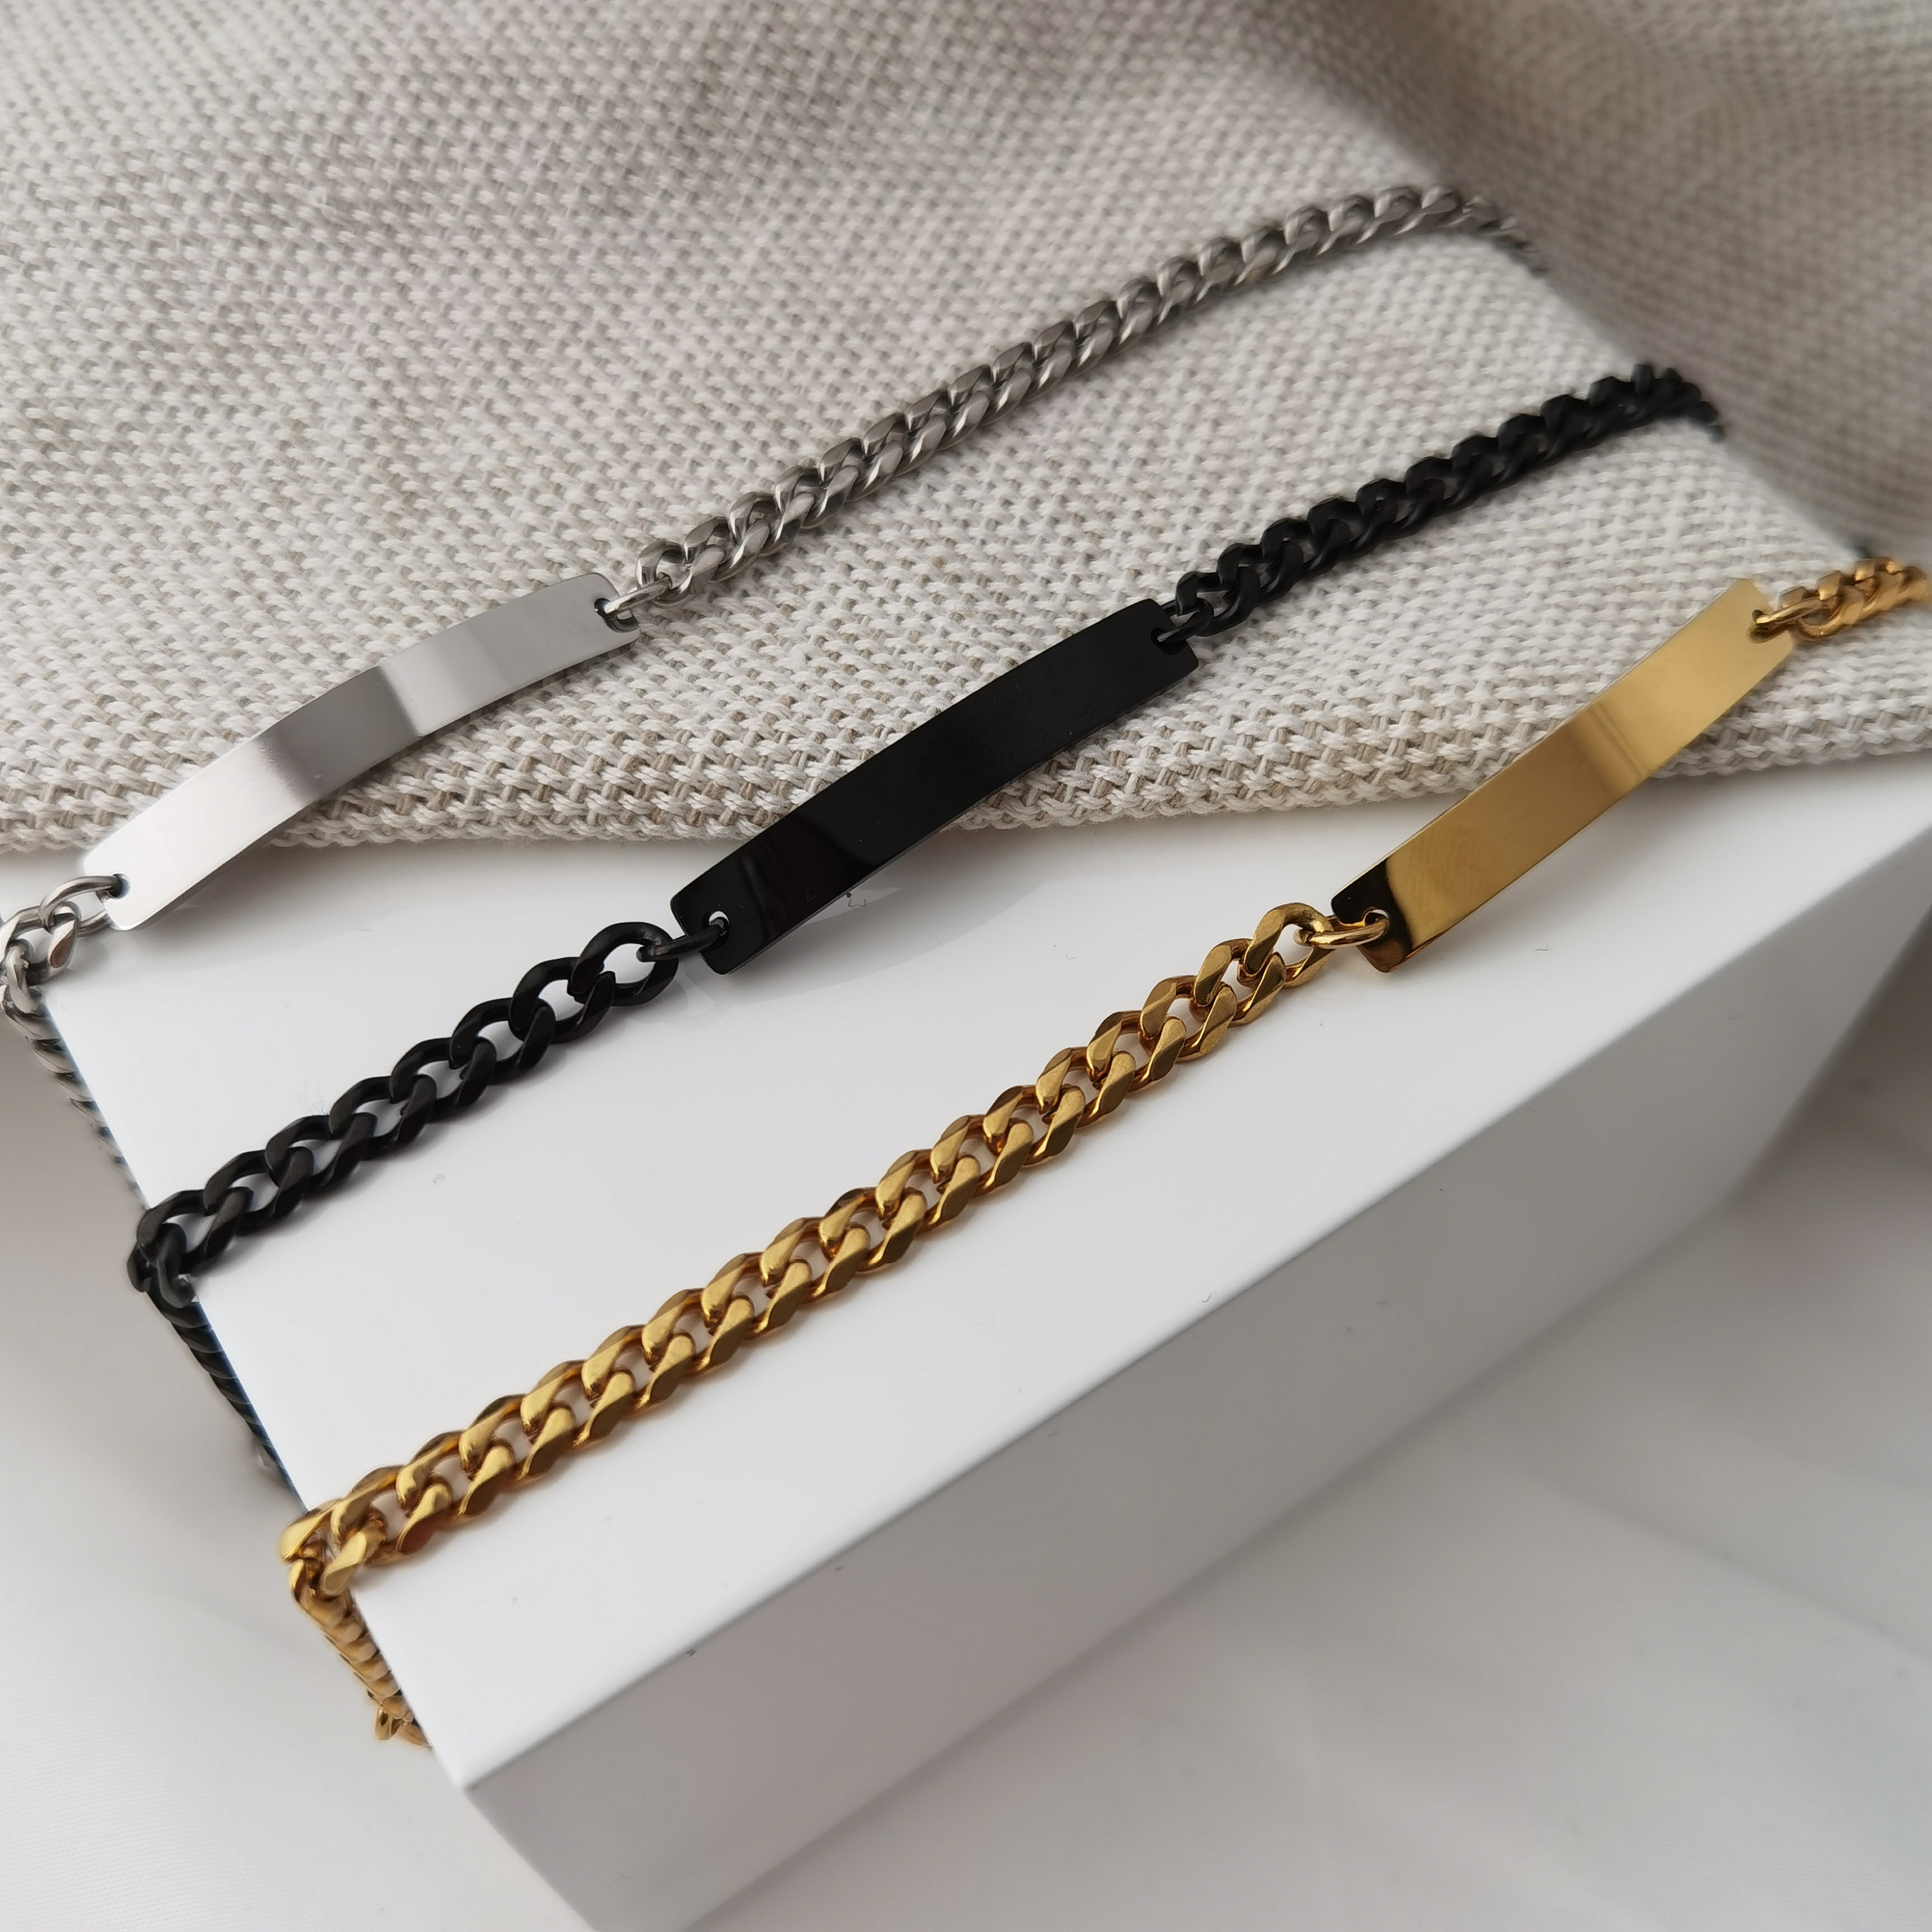 Buy Personalized Men's Bracelet Men's Stainless Steel Online in